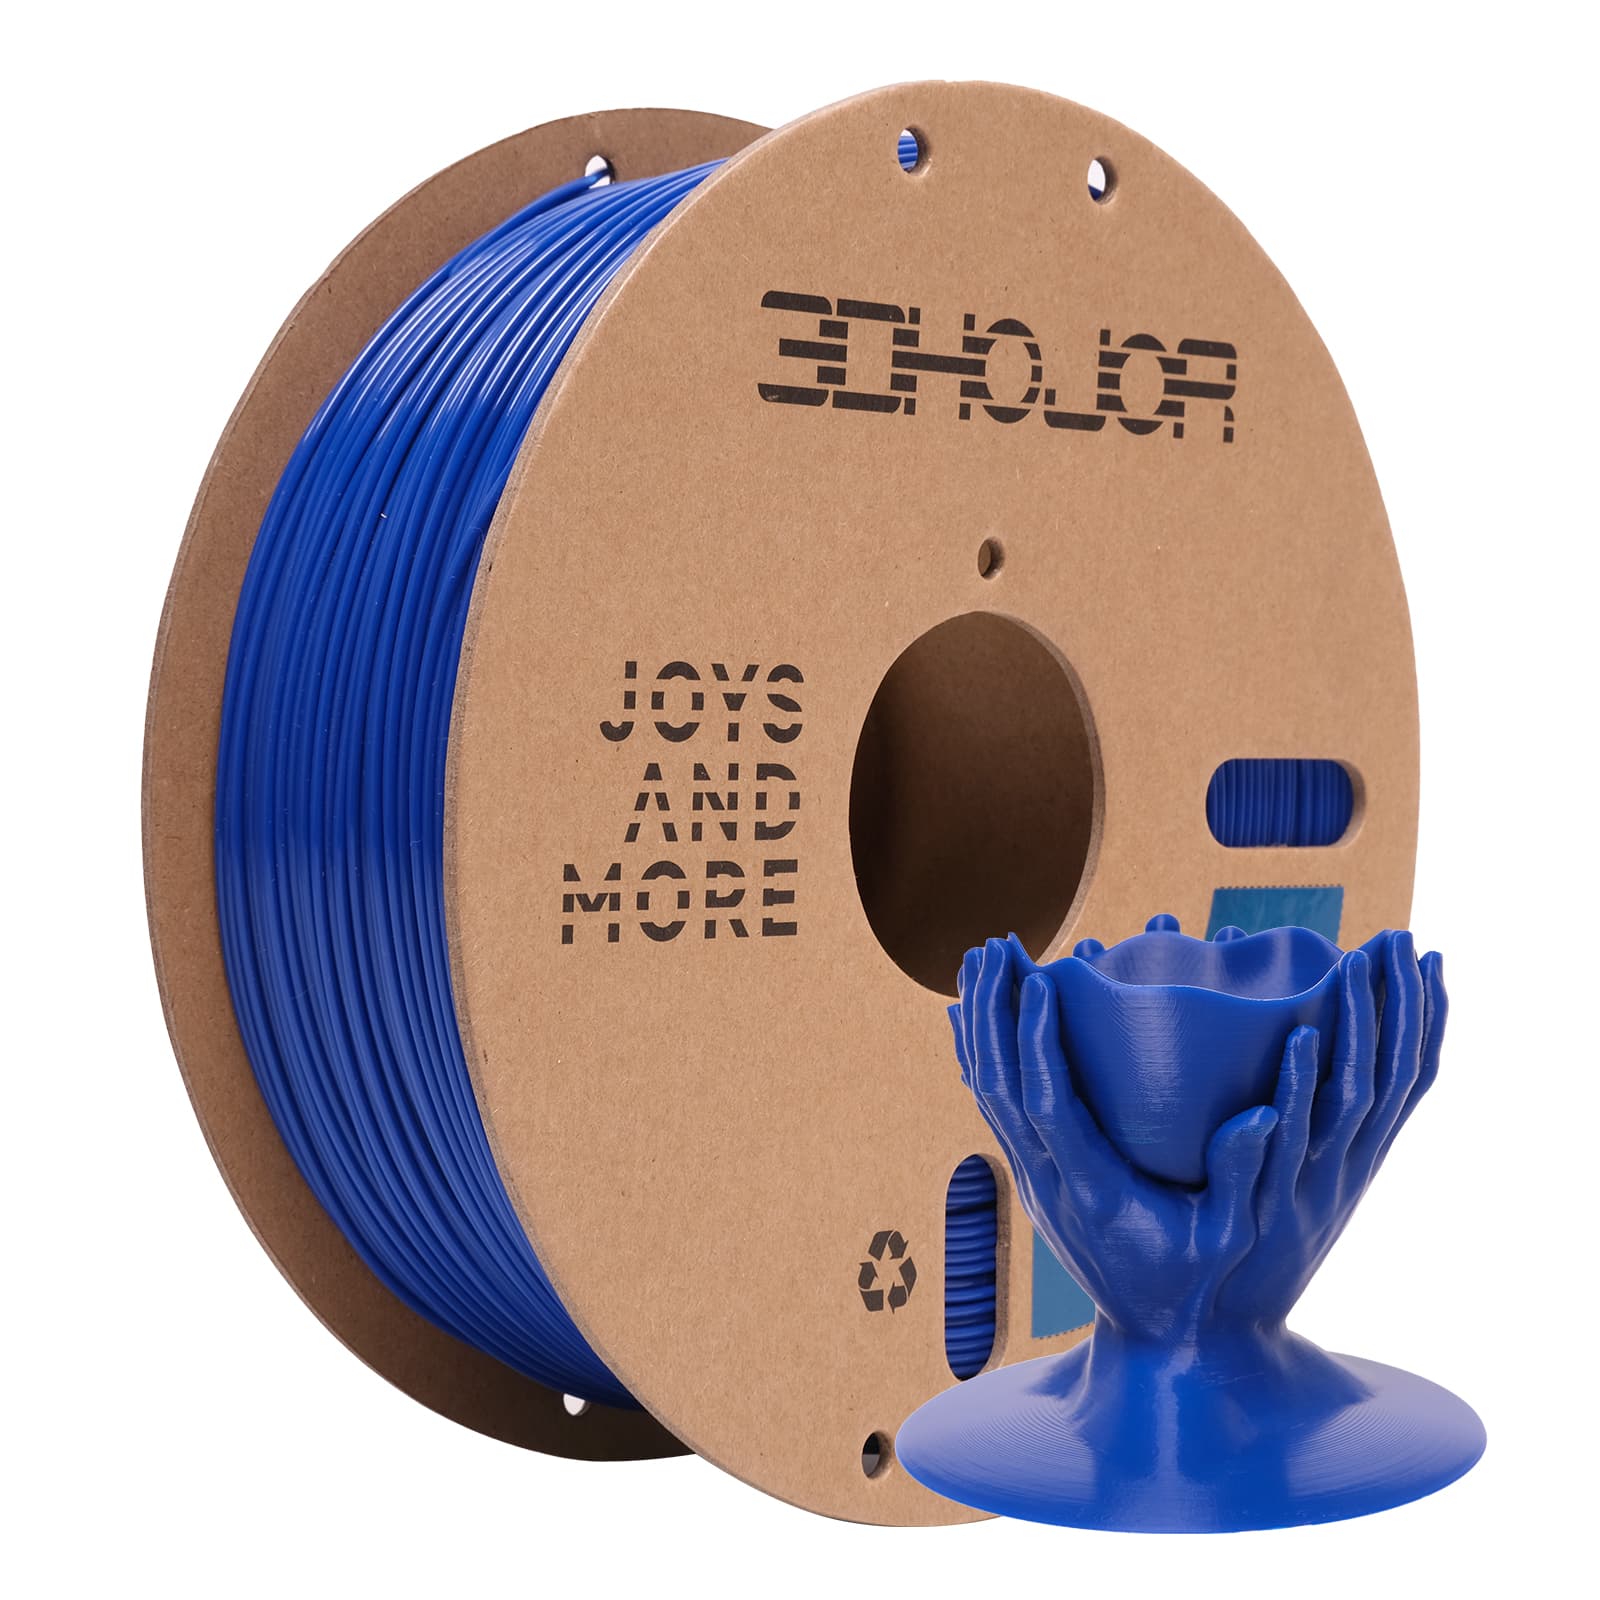 Creality PLA Filament Pro White, 1.75mm 3D Printer Filament, Ender PLA +  (Plus) Printing Filament, 1kg(2.2lbs)/Spool, Dimensional Accuracy ±0.03mm.